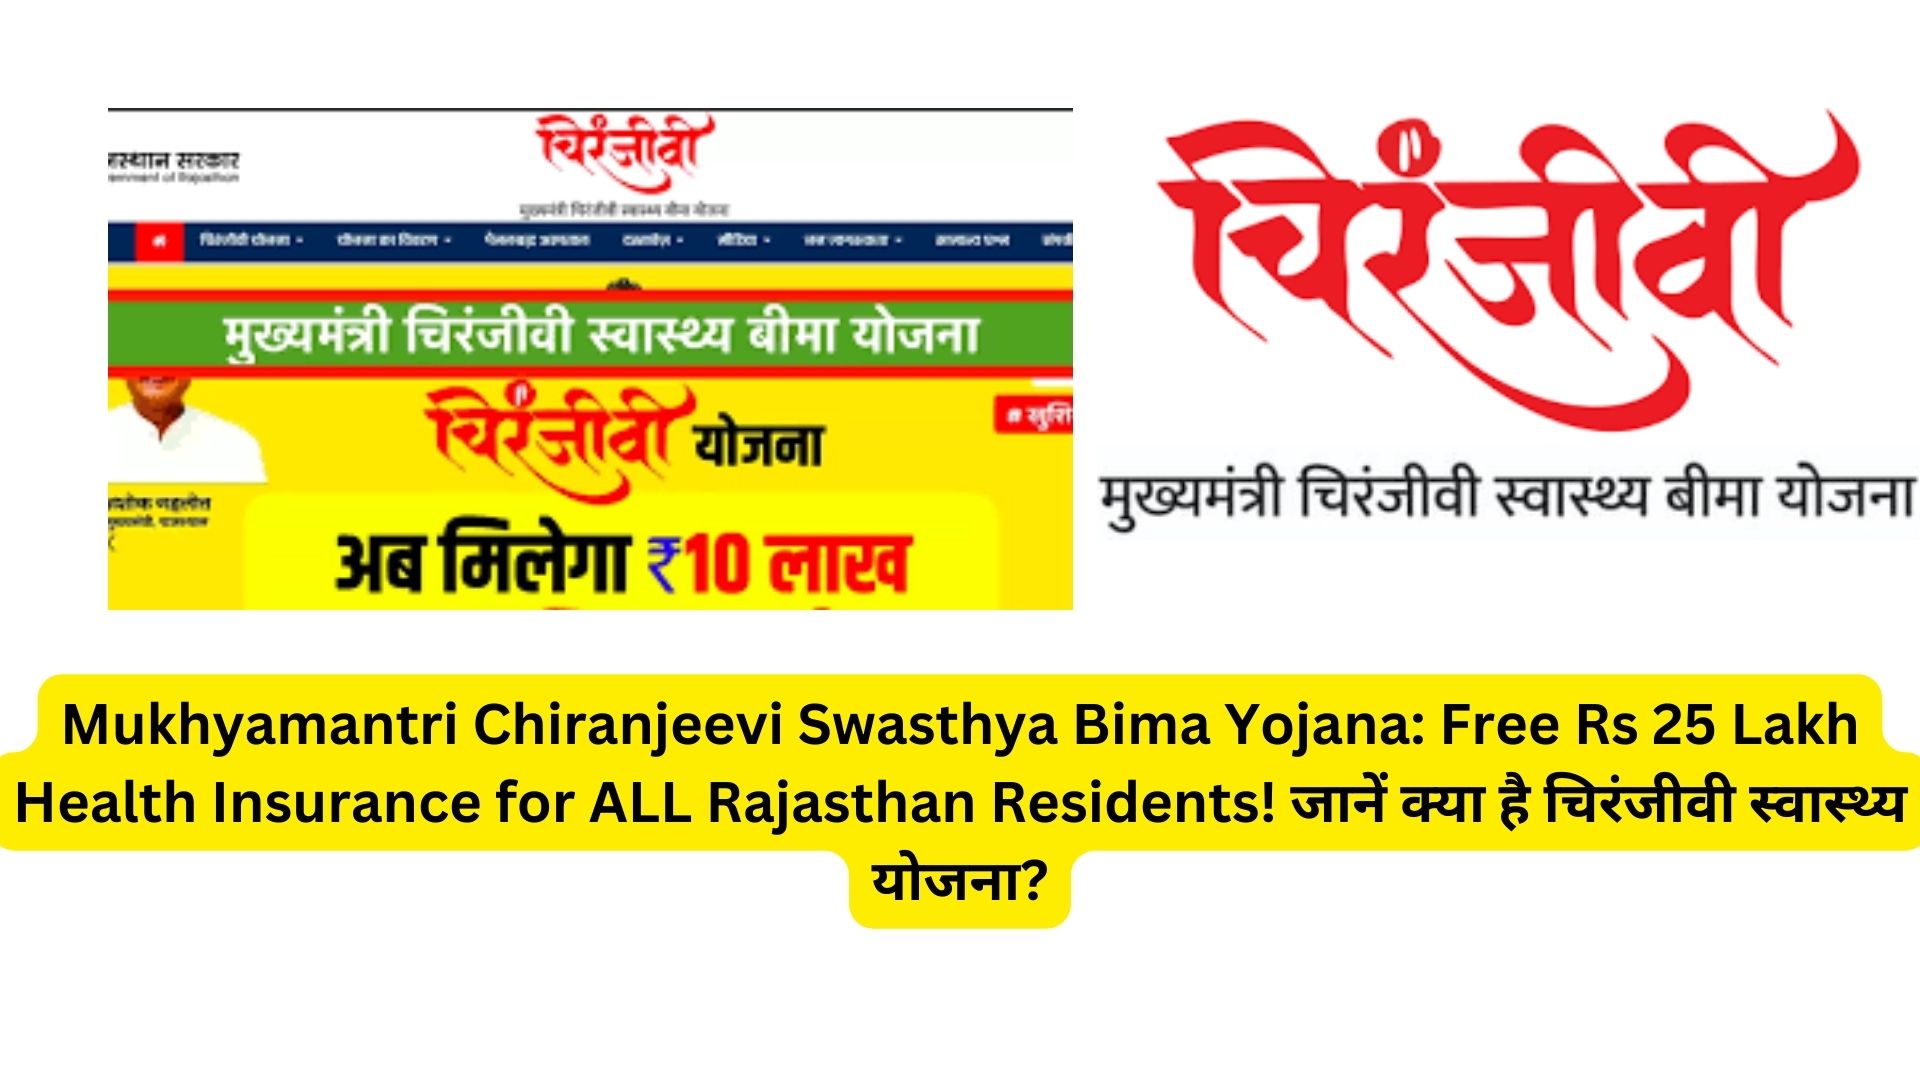 Mukhyamantri Chiranjeevi Swasthya Bima Yojana: Free Rs 25 Lakh Health Insurance for ALL Rajasthan Residents! जानें क्या है चिरंजीवी स्वास्थ्य योजना?